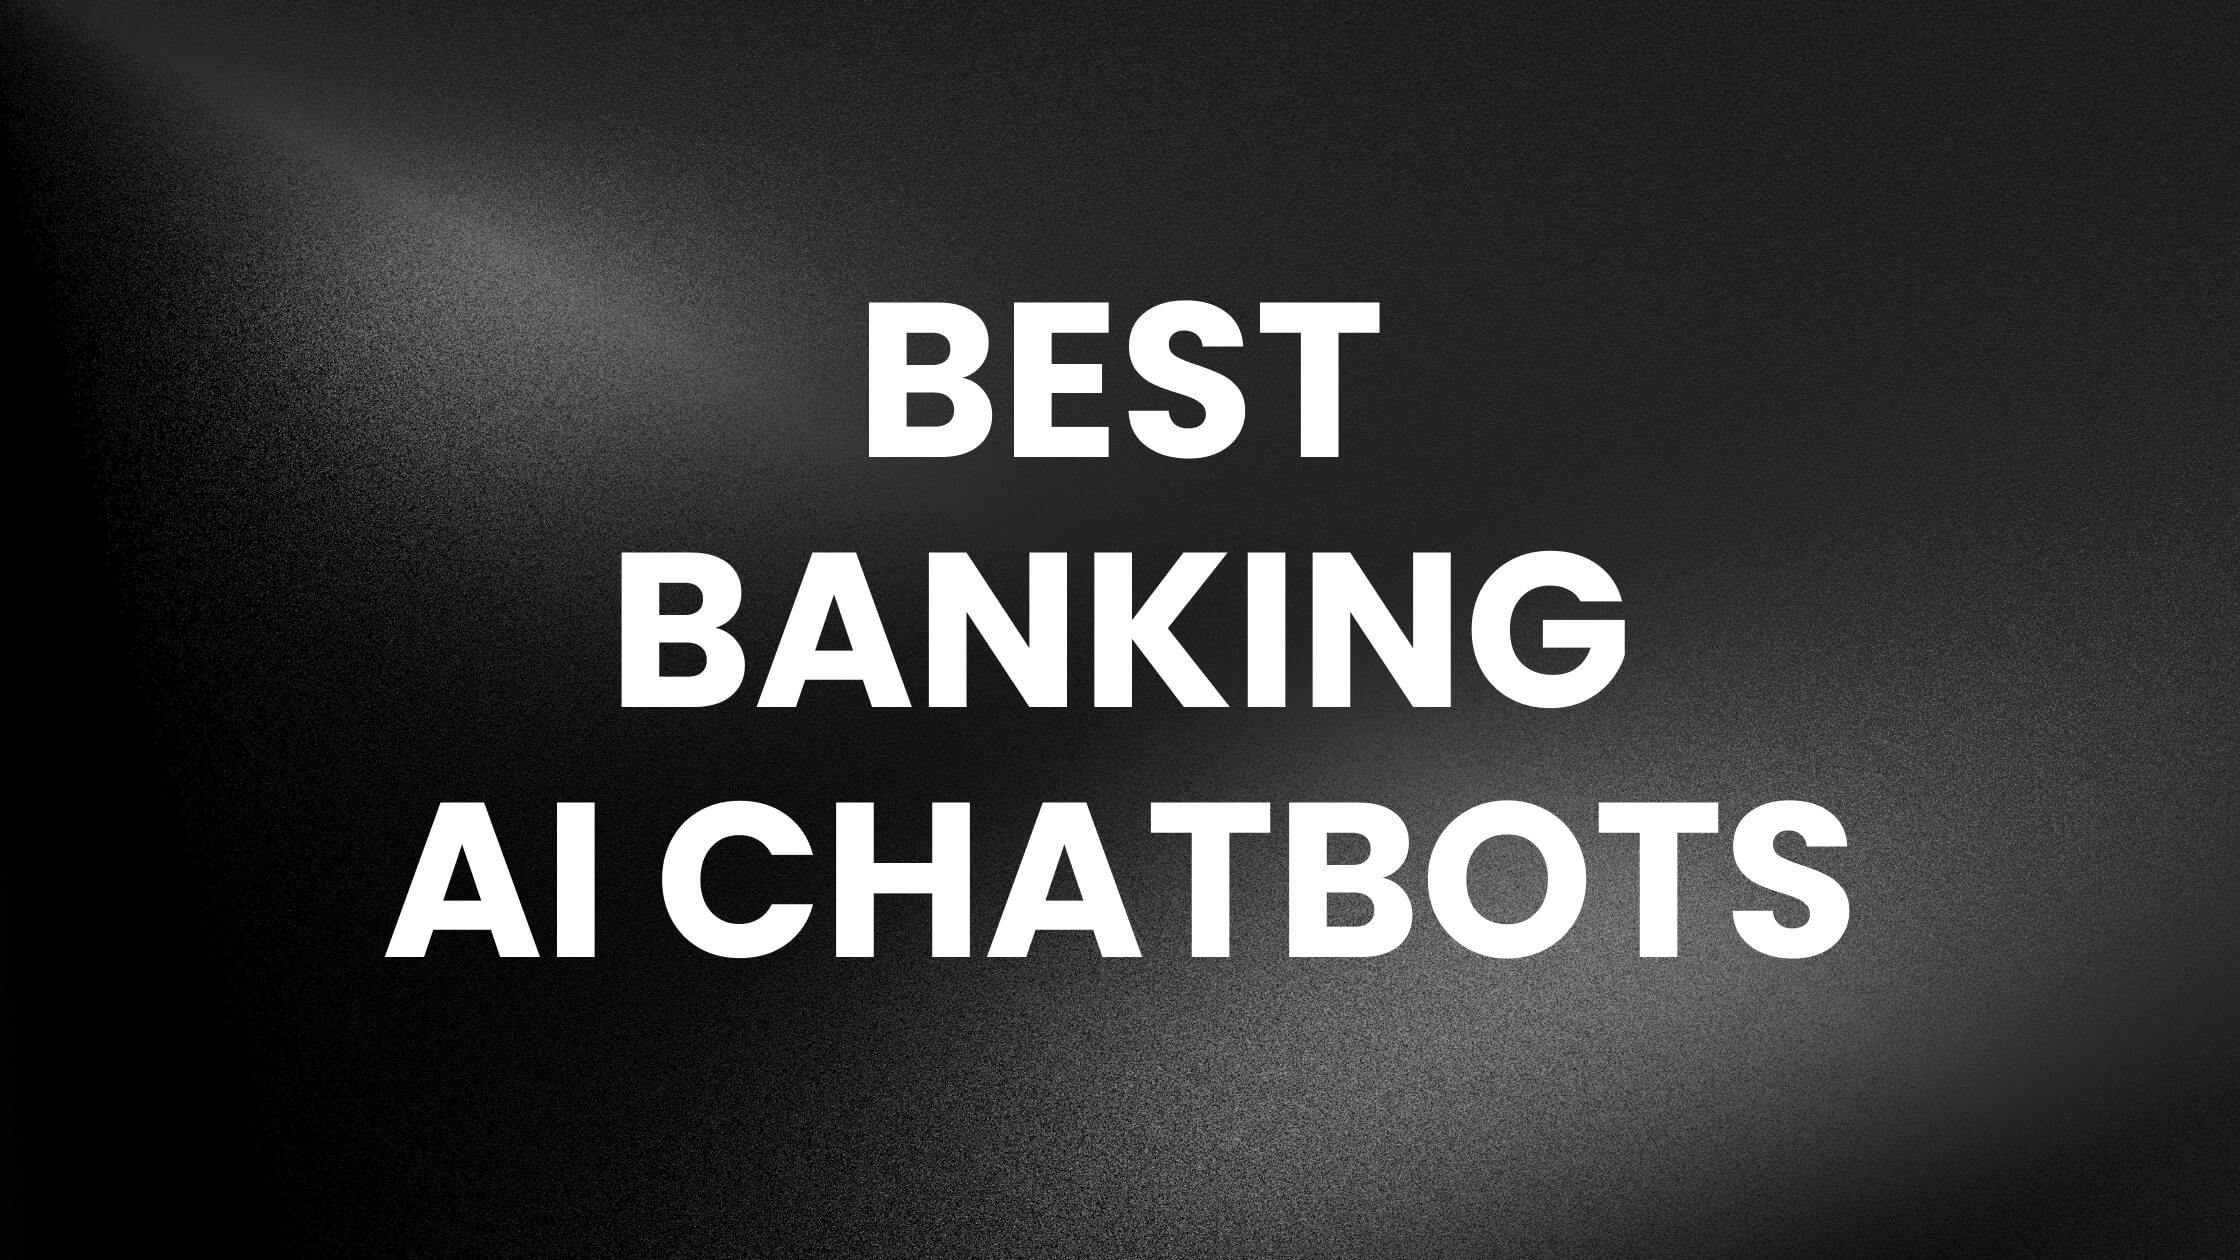 Best Banking AI Chatbots